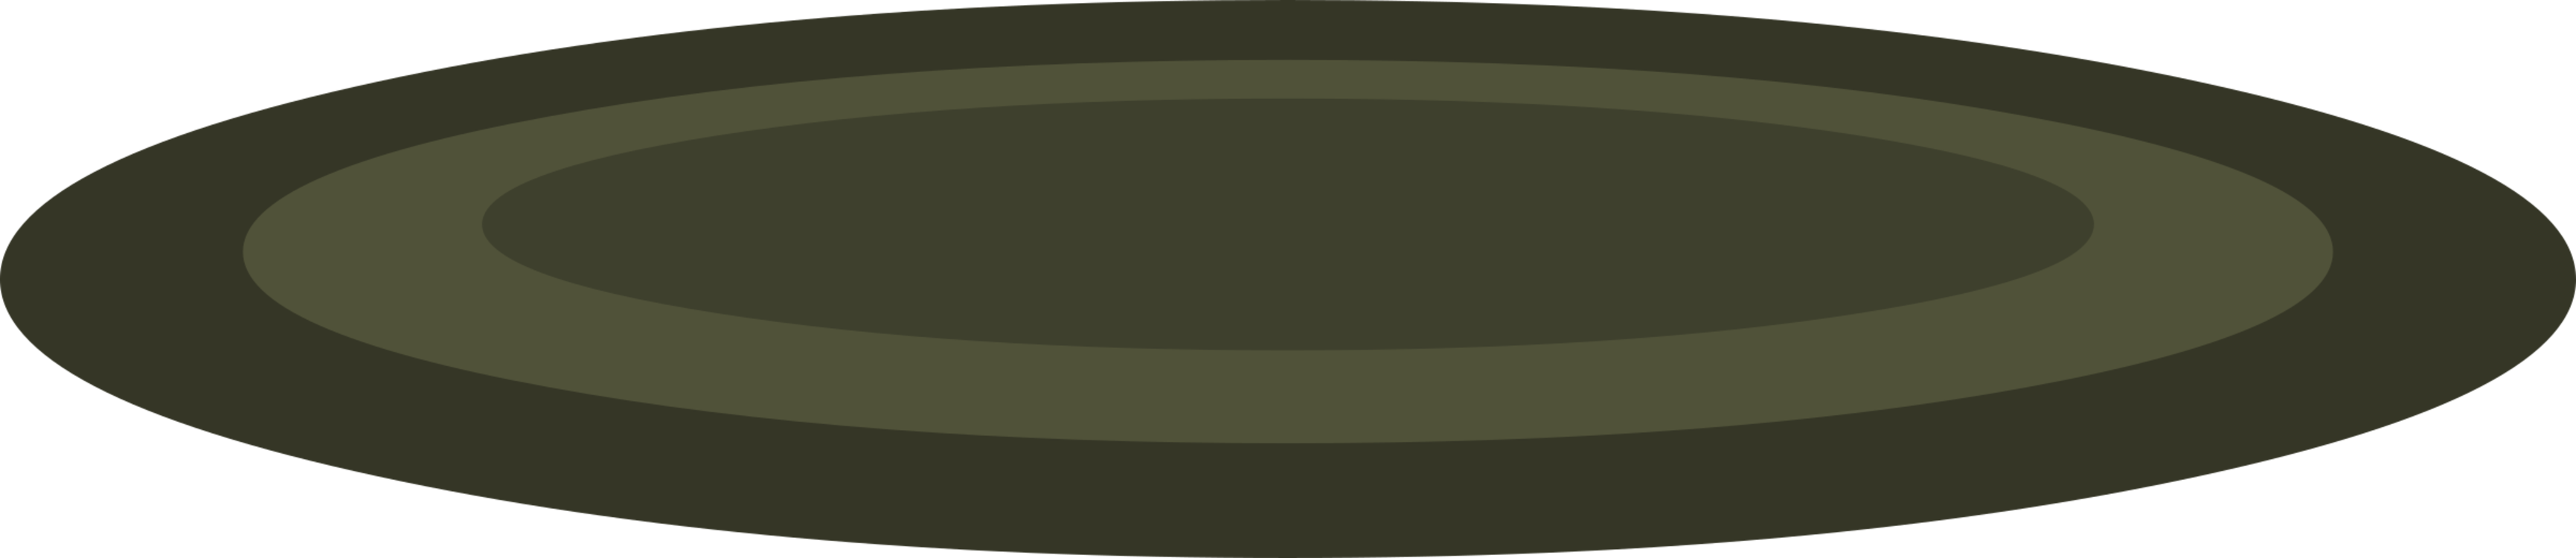 Oval,Circle,Green